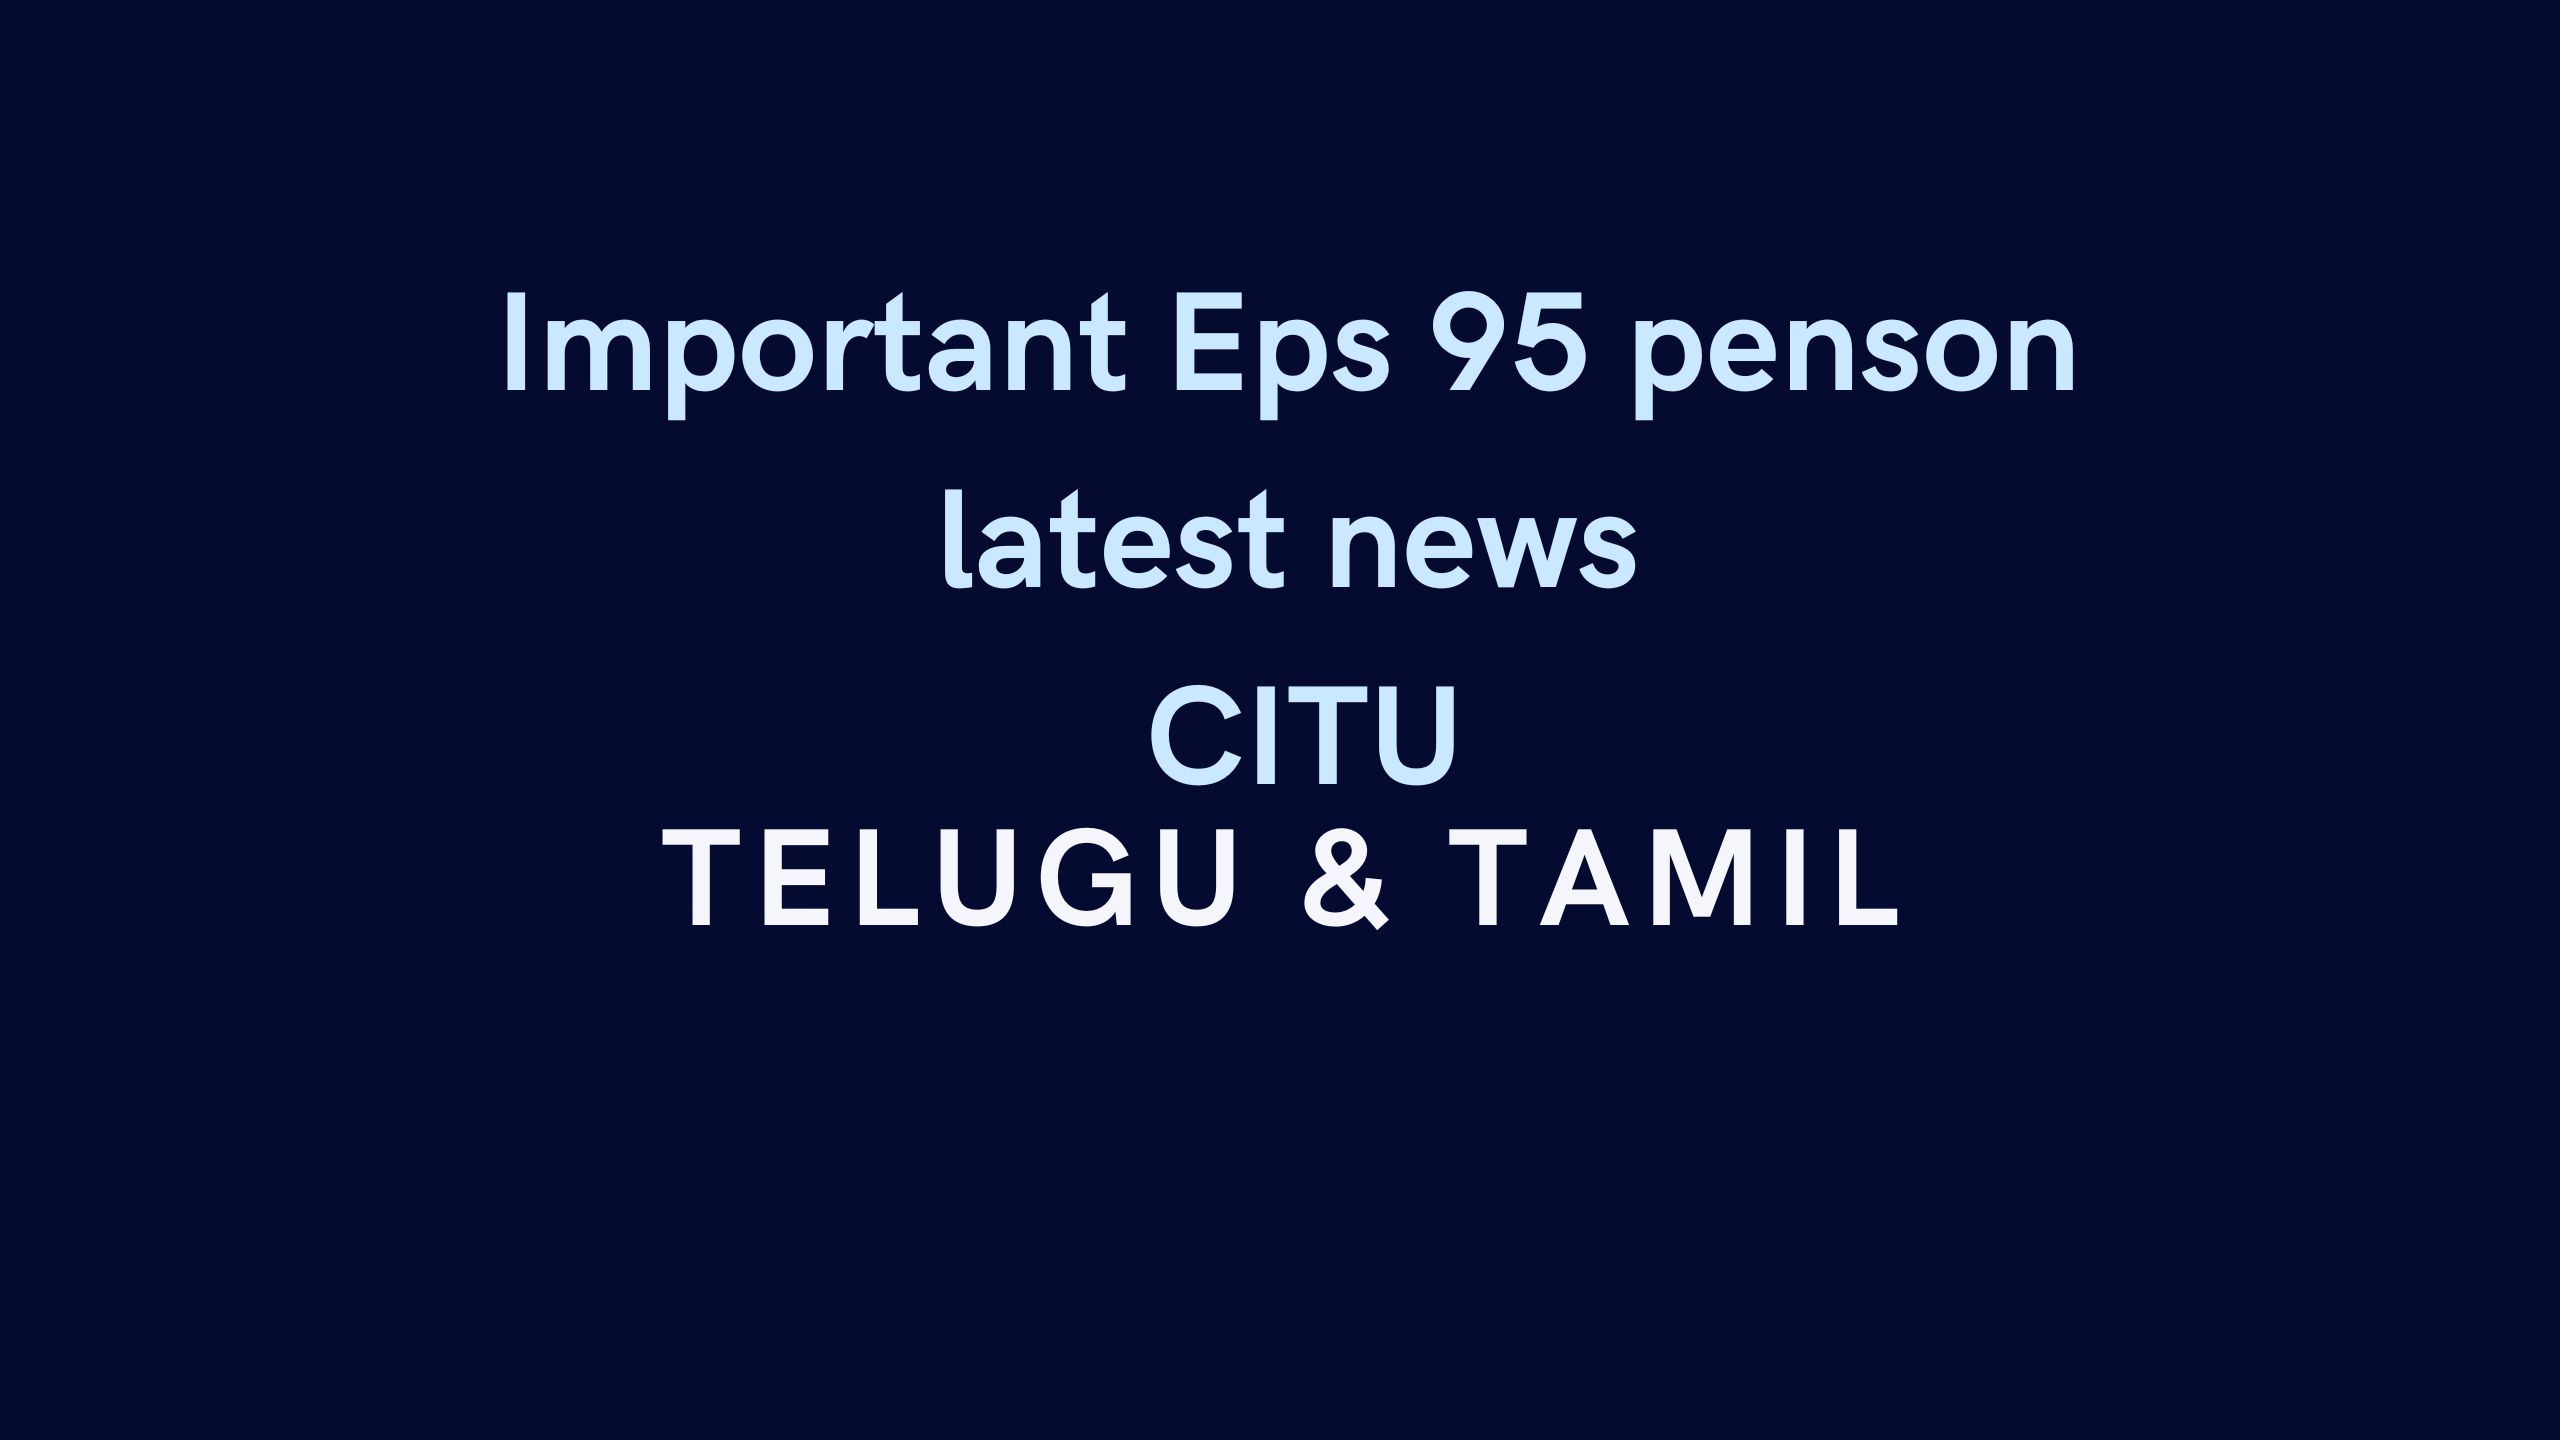 Eps 95 penson latest news Today in Telugu